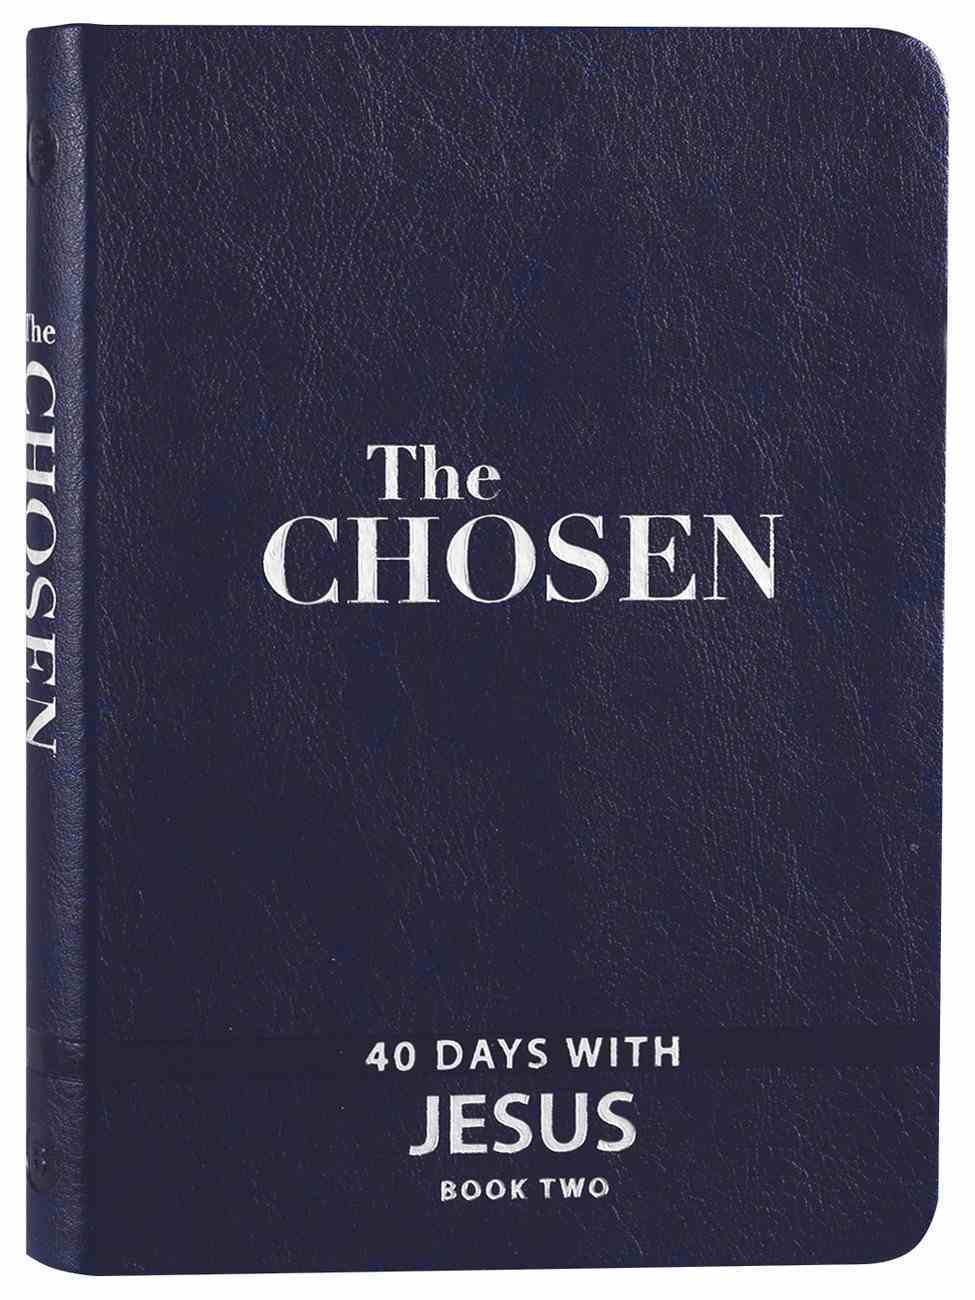 The Chosen : 40 Days With Jesus (Book 2) (The Chosen Series) Imitation Leather